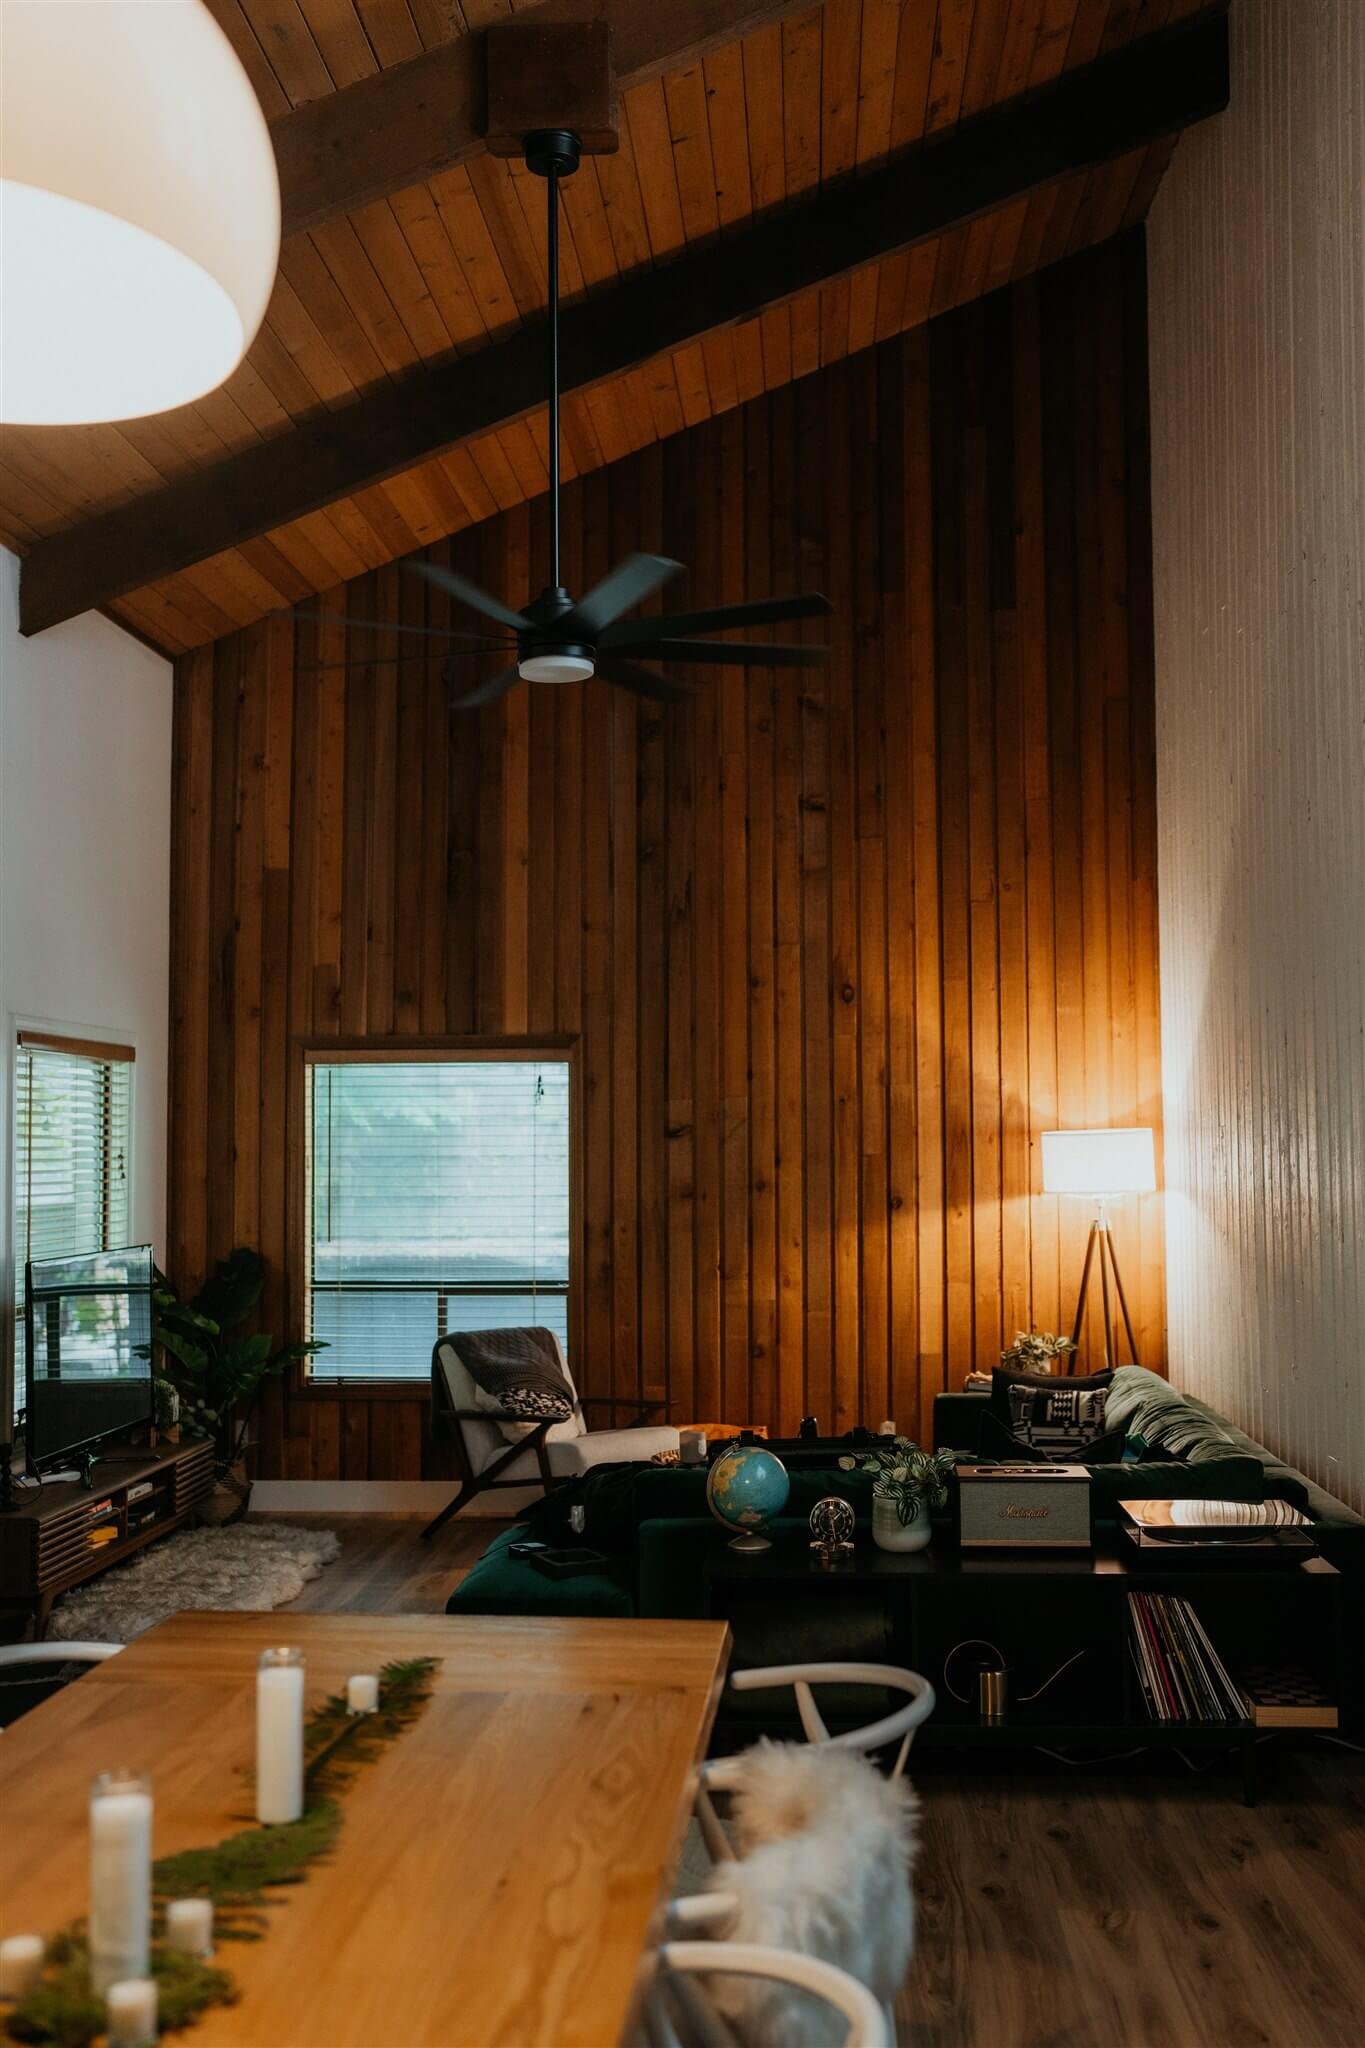 Airbnb cabin in Mount Hood, Oregon